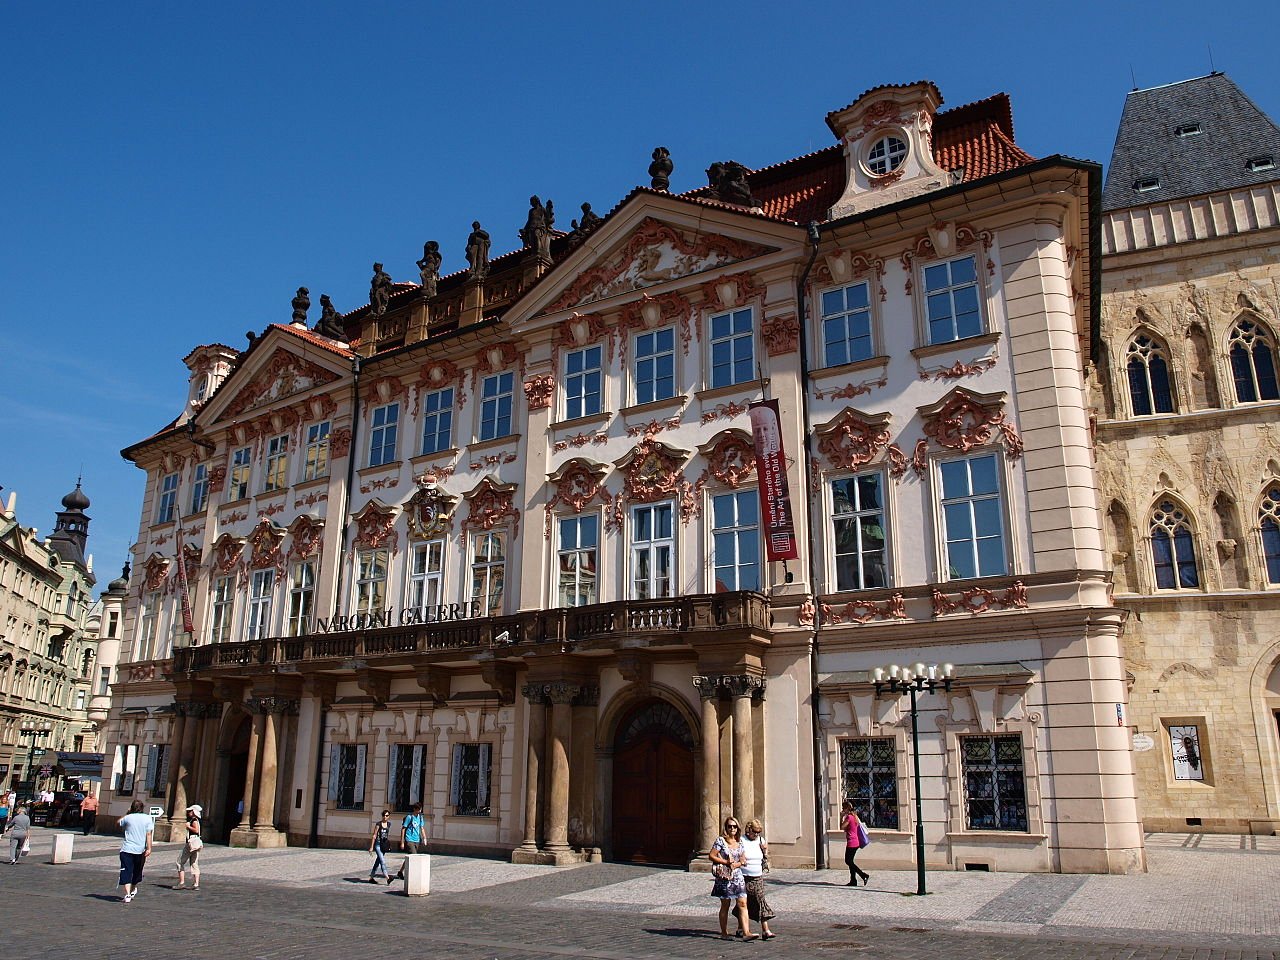 Palác Kinských, National Gallery, What to do in Prague 4